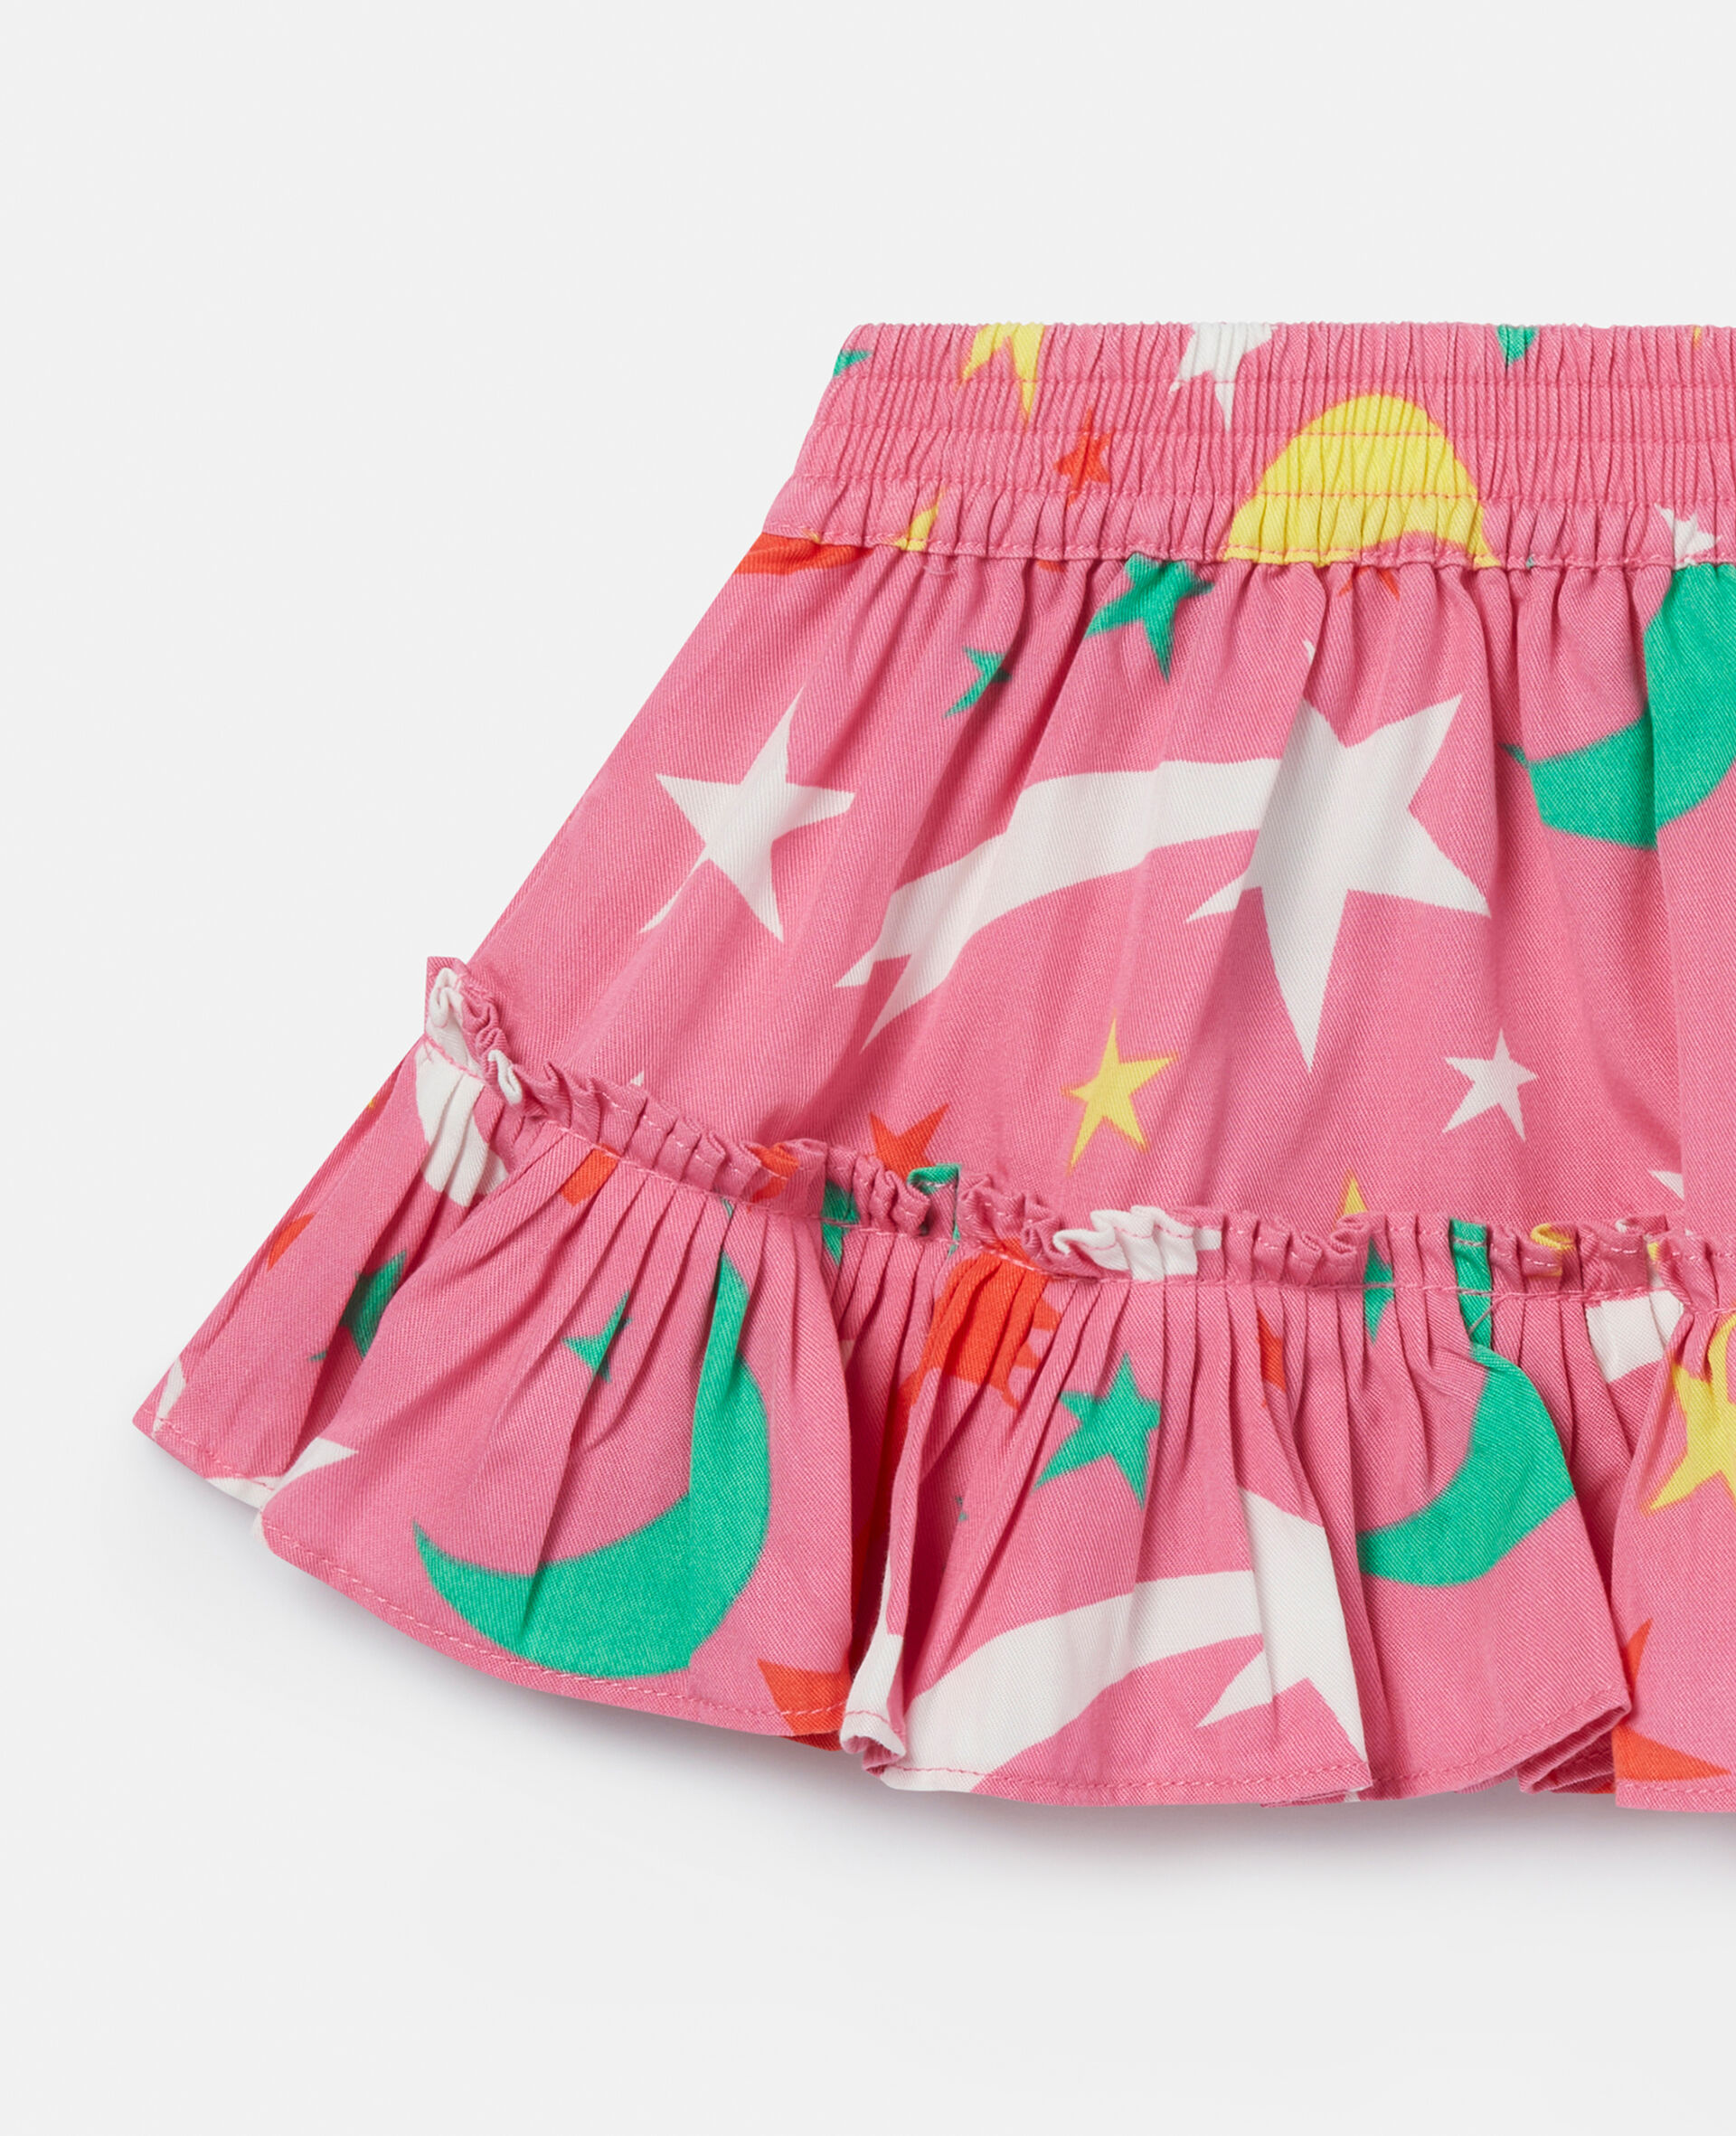 Shooting Stars Print Twill Skirt-Pink-large image number 1